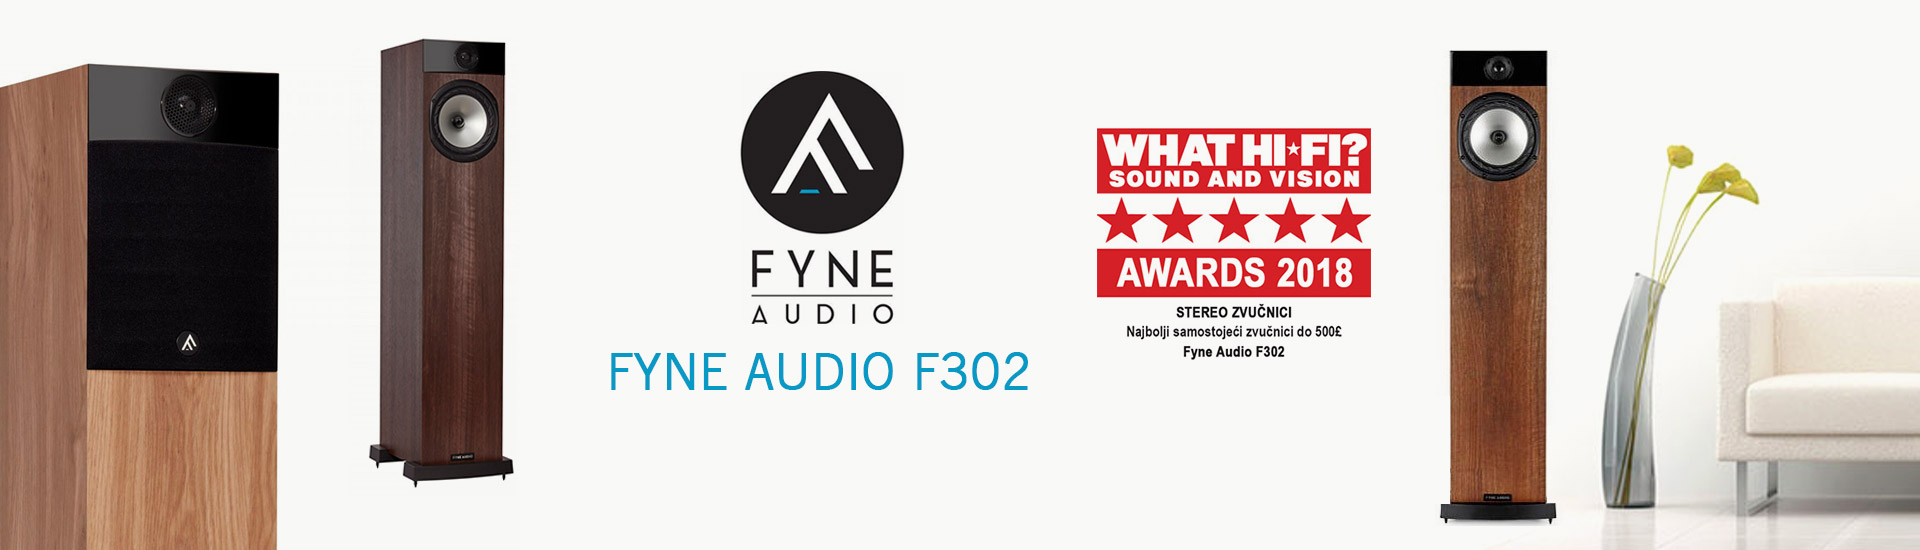 Fyne Audio 302 What hifi 2018 nagrada